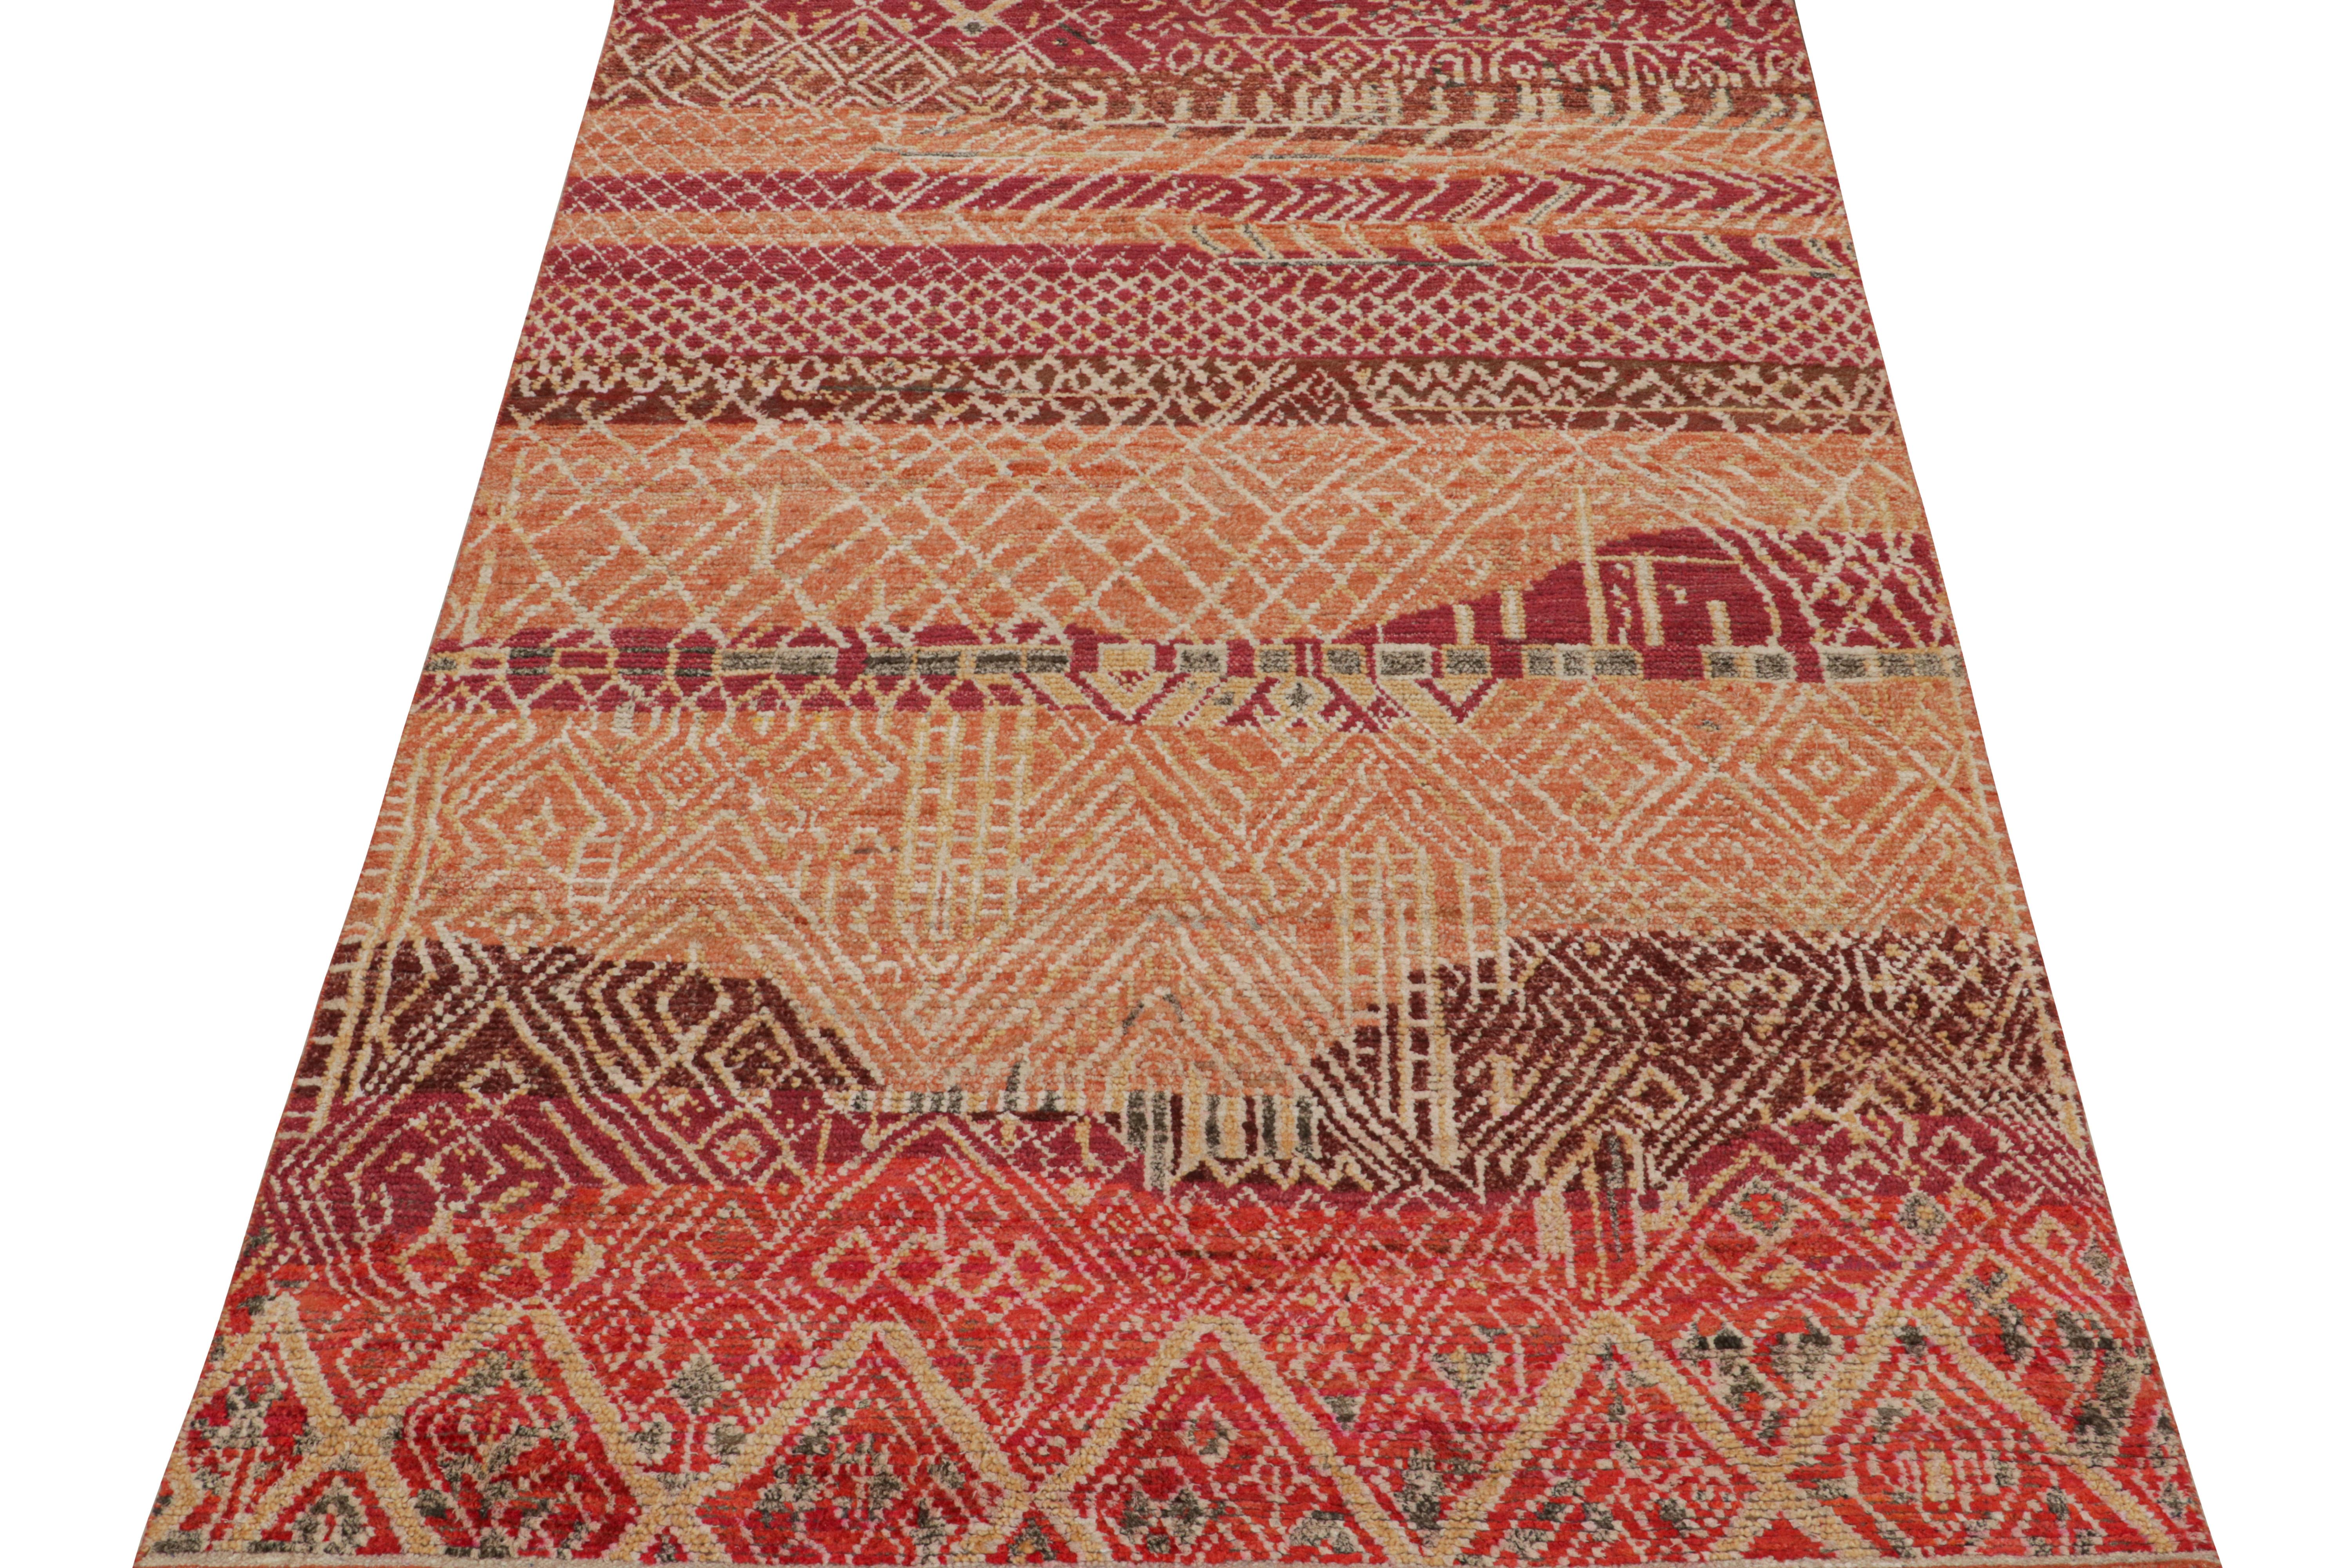 Tribal Rug & Kilim’s Moroccan Style Rug in Red, Orange & Beige-Brown Geometric Patterns For Sale